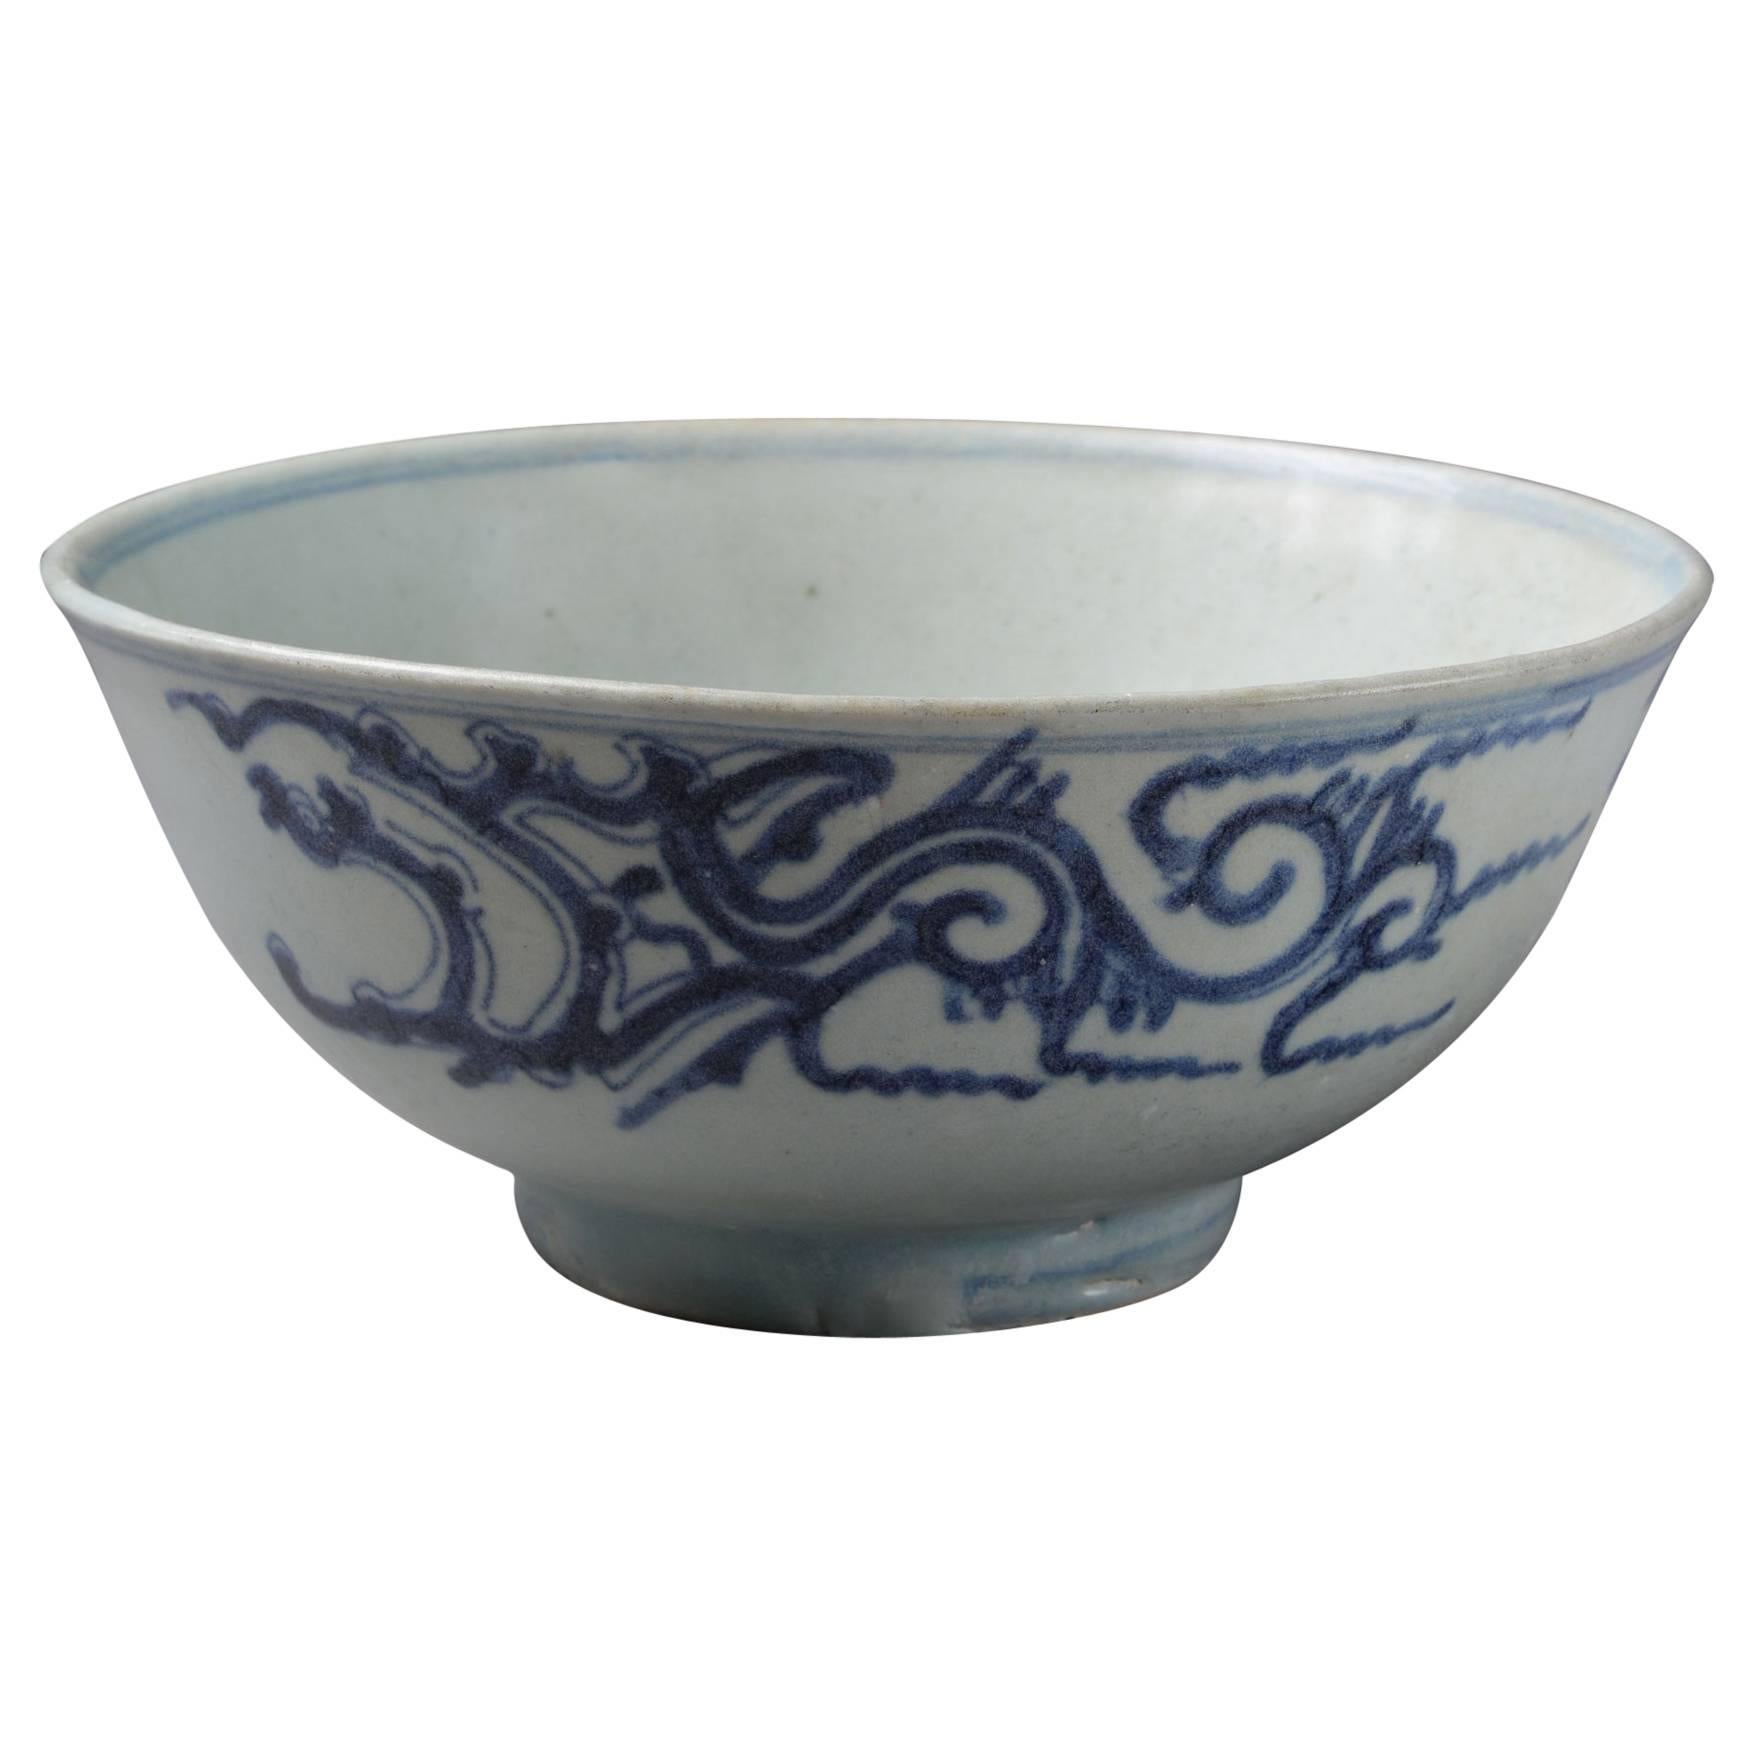 Large Antique Chinese Porcelain Shipwreck Salvaged Dragon Bowl, 1817